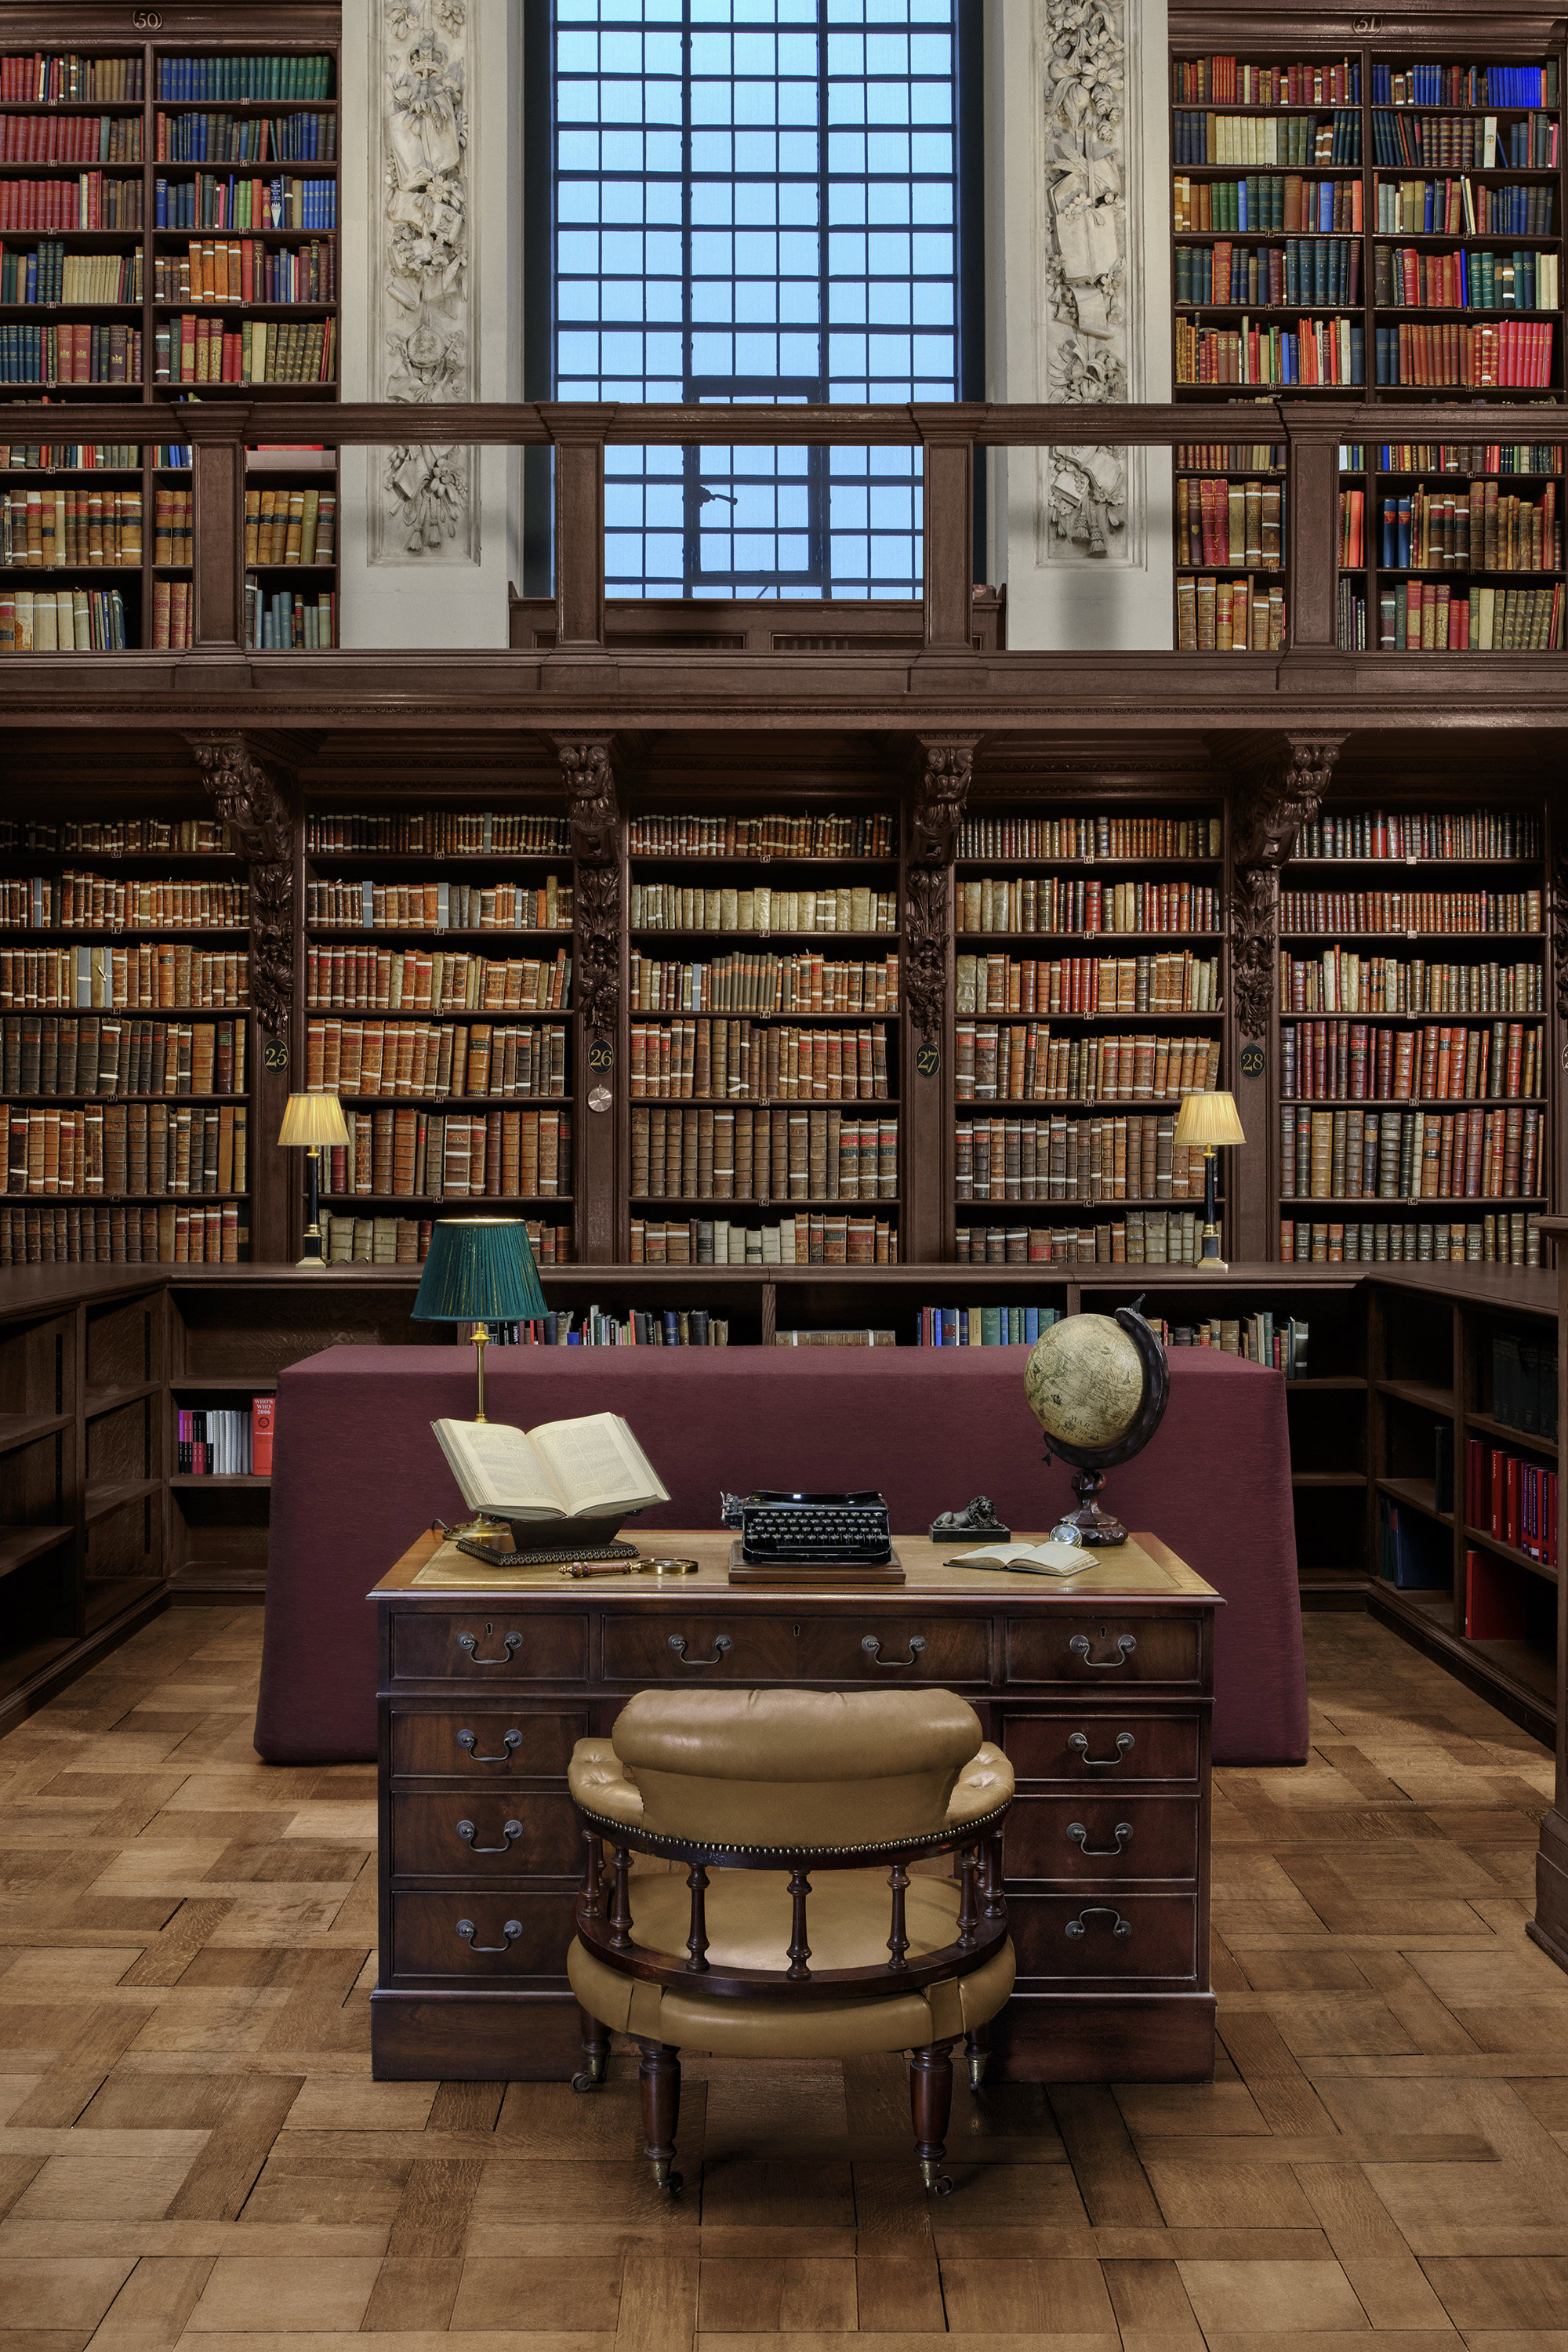 La biblioteca que atesora 22.000 volúmenes